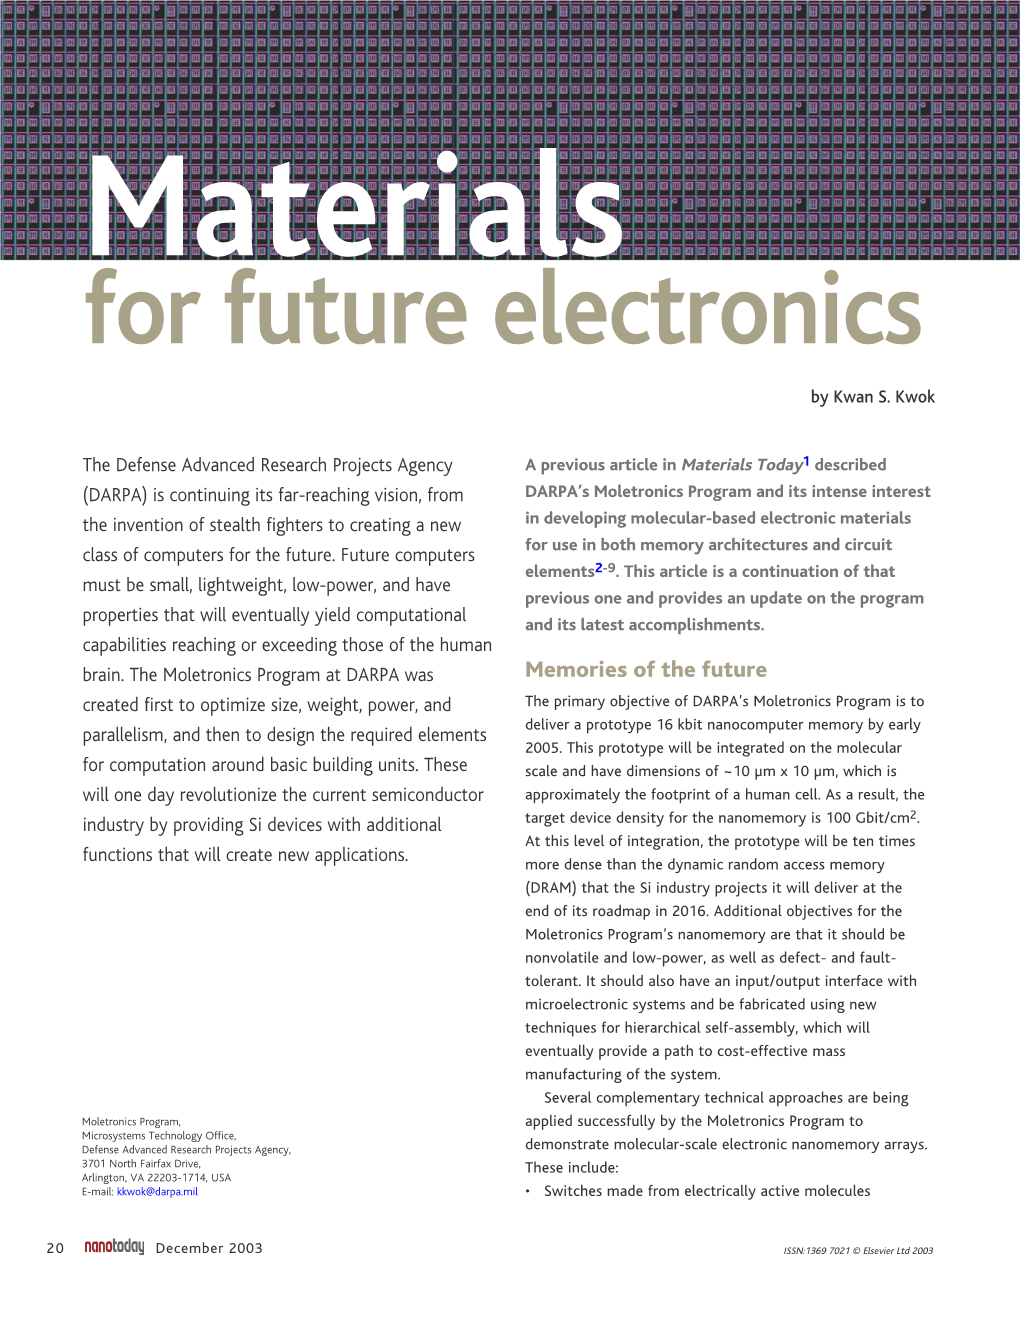 For Future Electronics